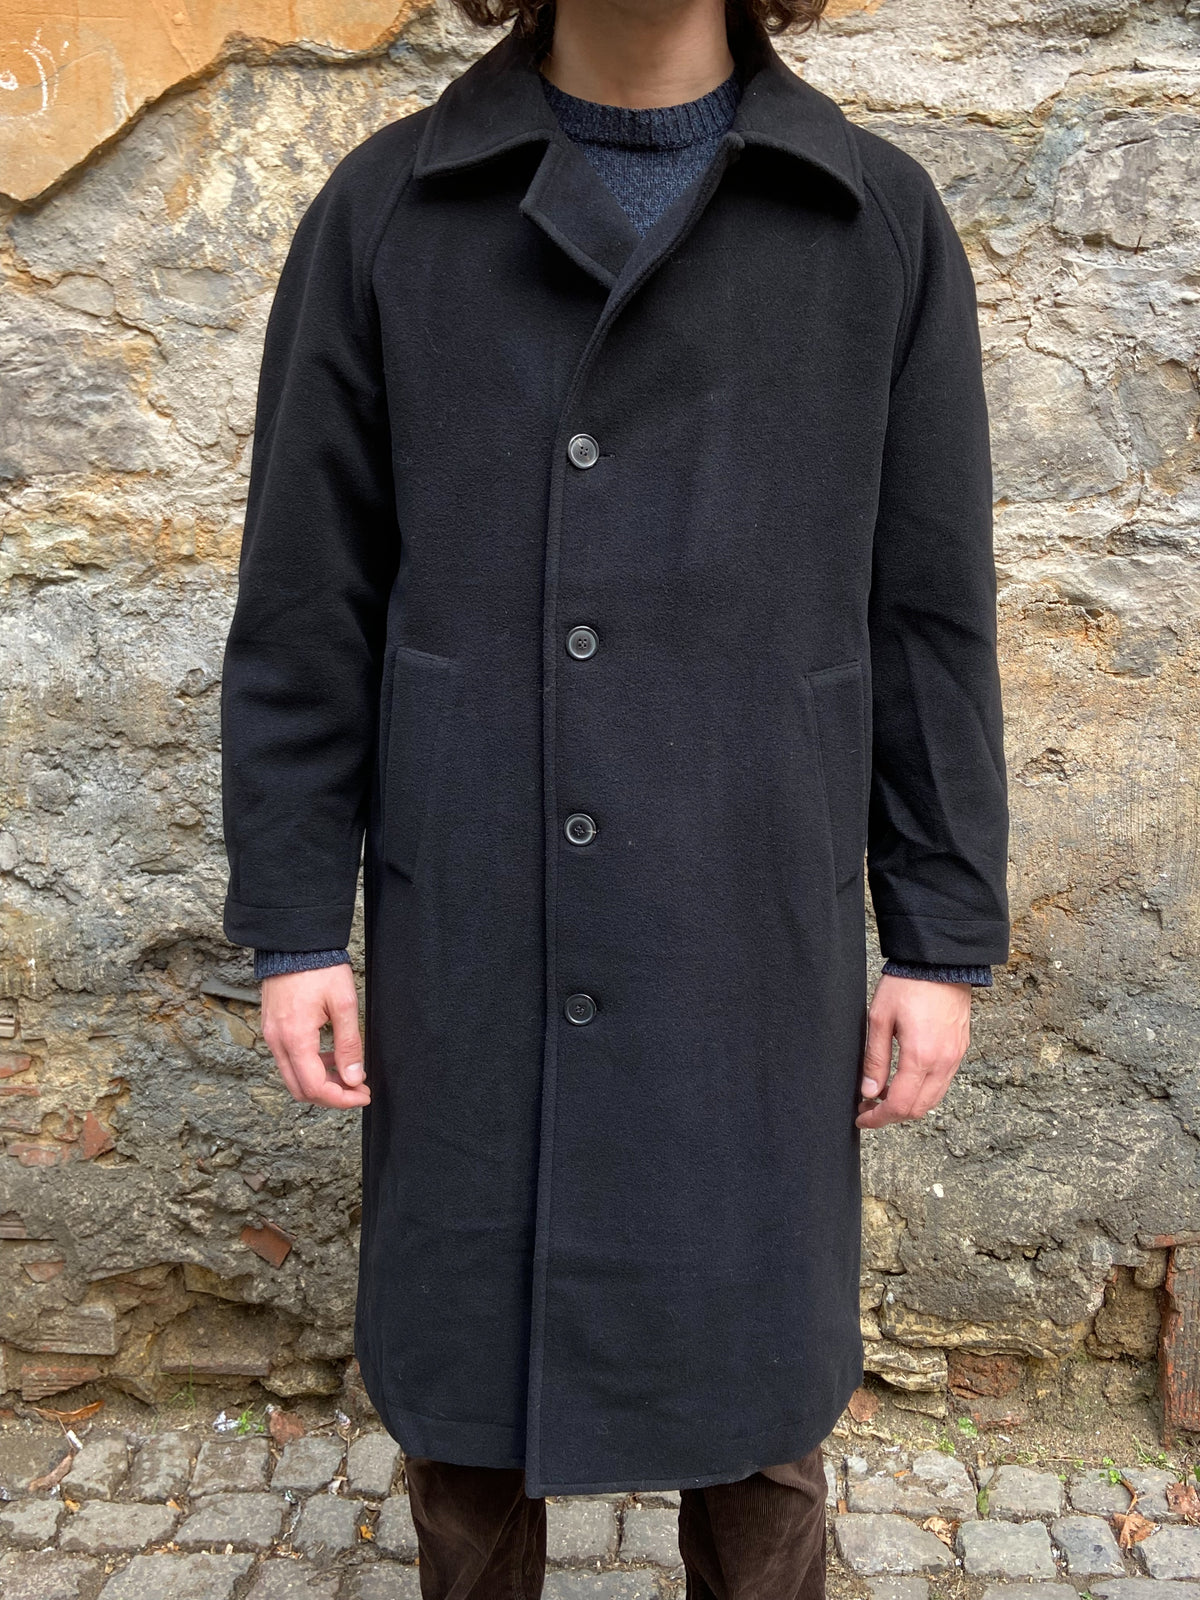 Hansen Garments Sigurd Coat Black